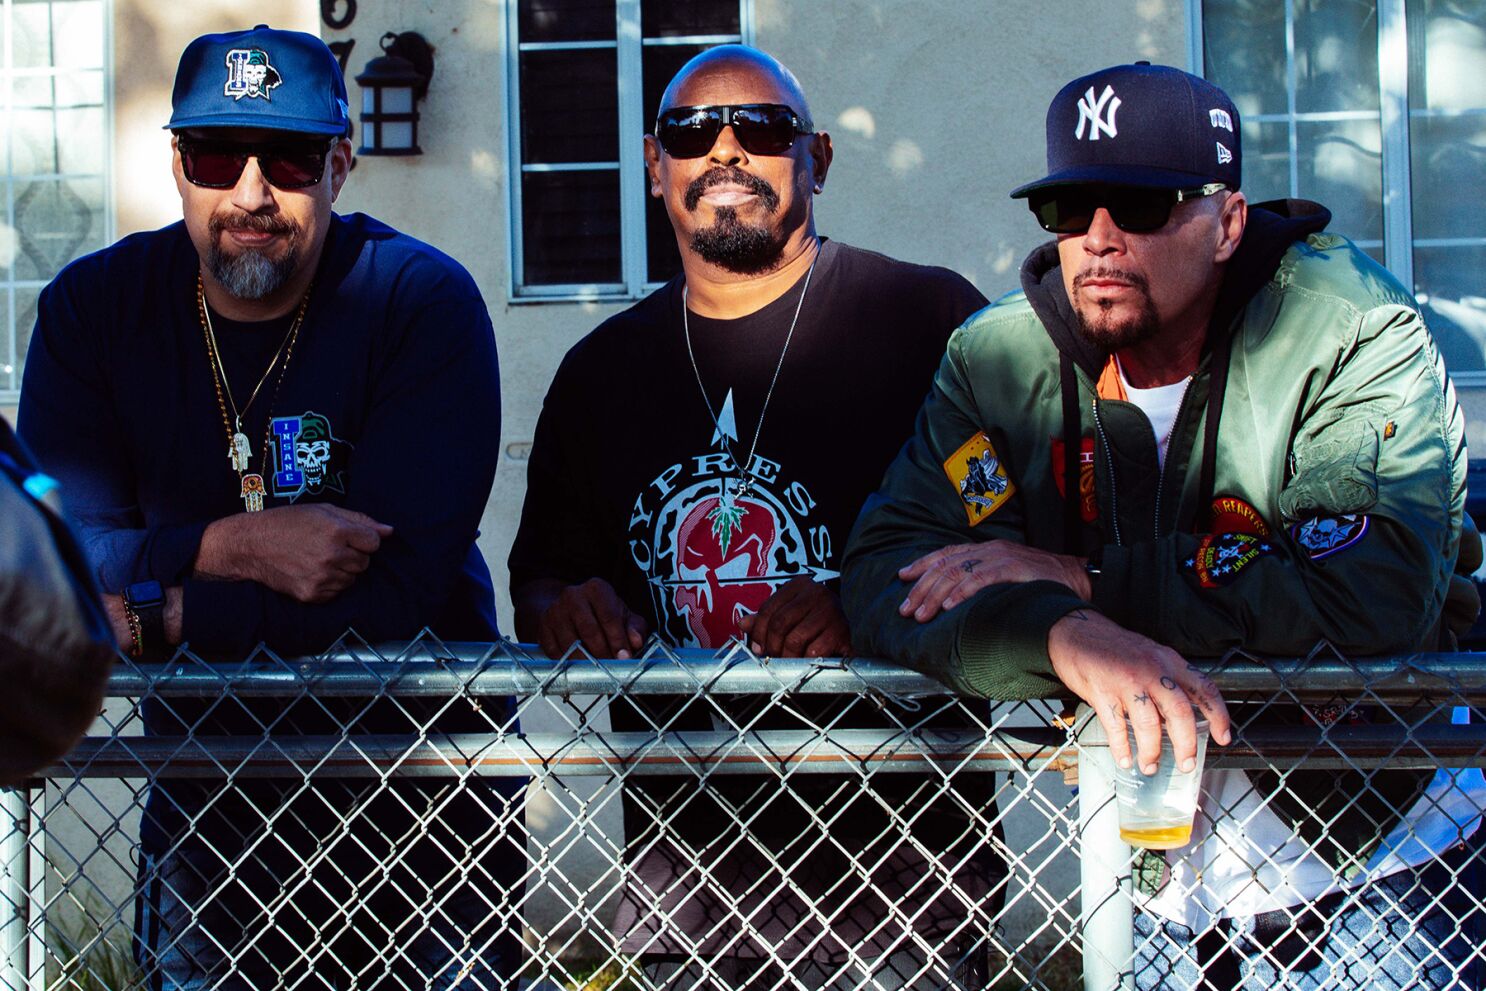 Cypress hill insane in the brain. Группа Cypress Hill. Кепка Cypress Hill. Cypress Hill 1990. Cypress Hill IV 1998.